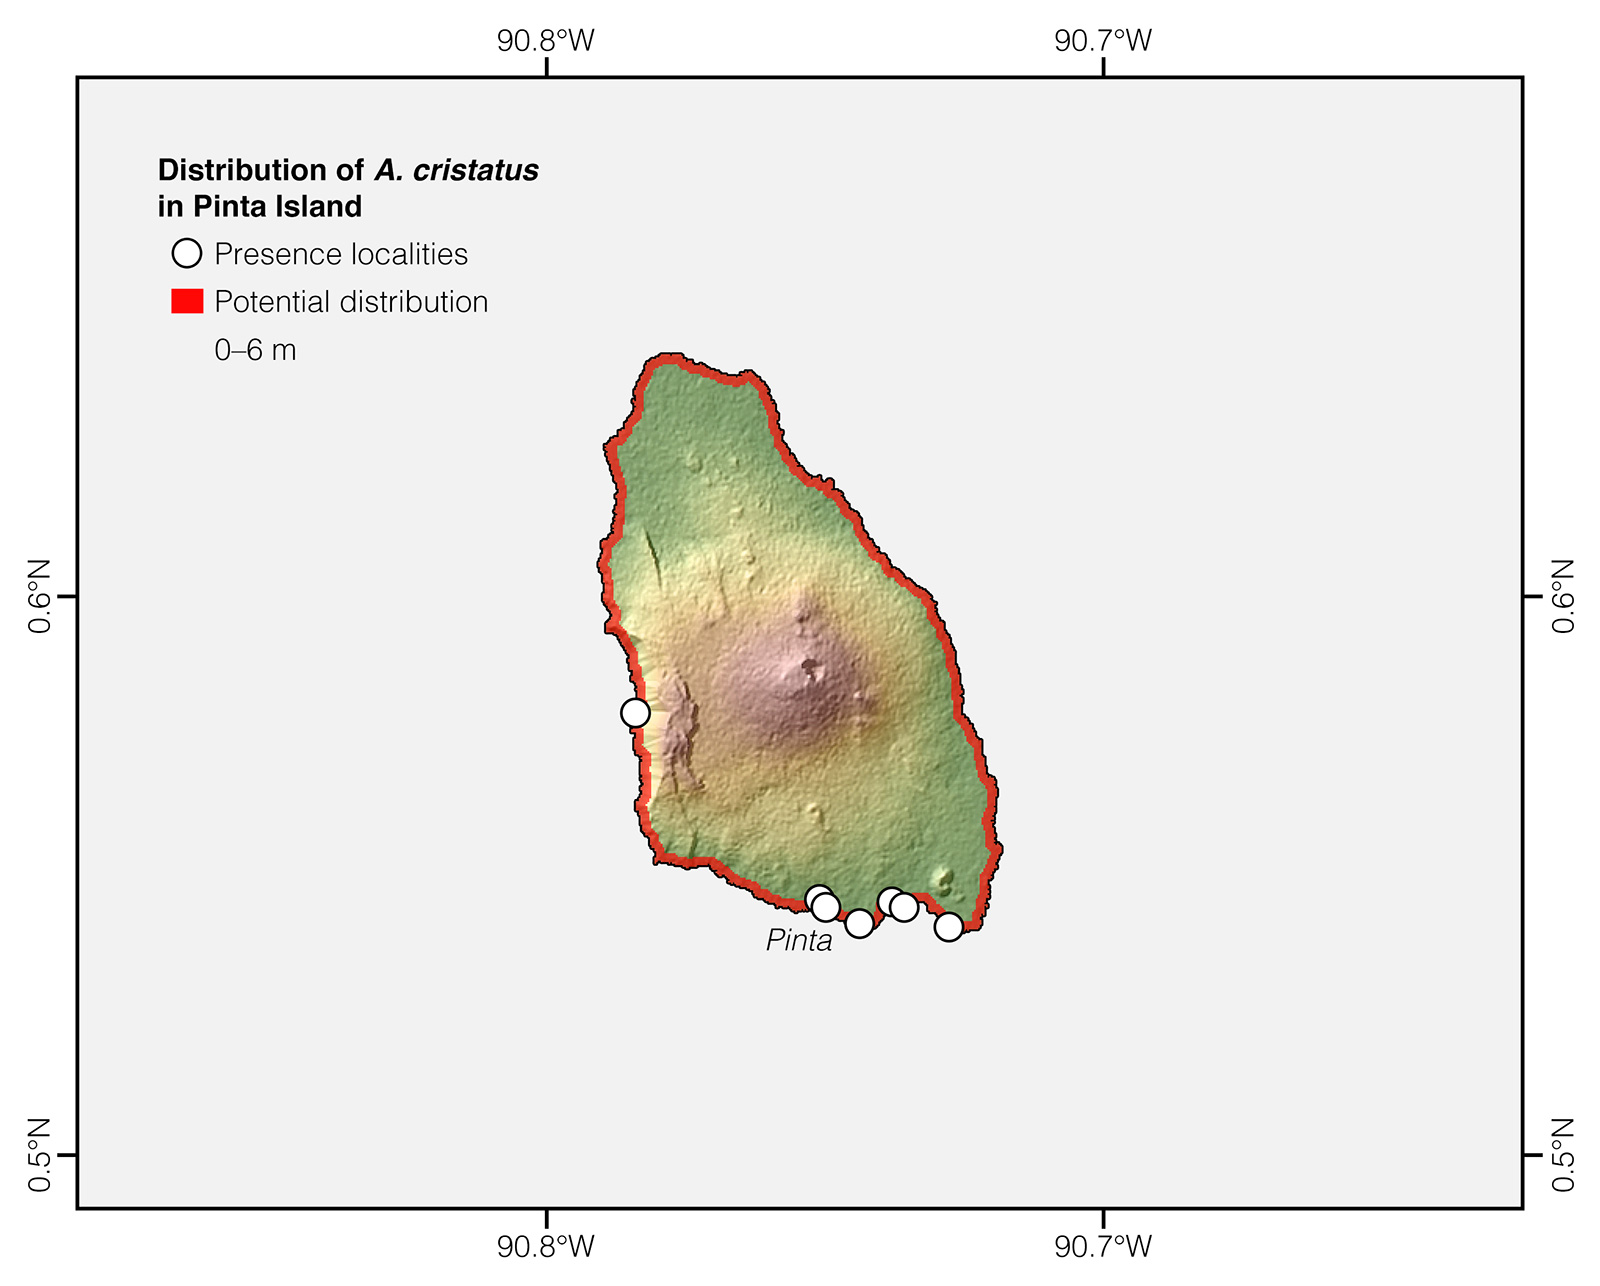 Distribution of Amblyrhynchus cristatus in Pinta Island